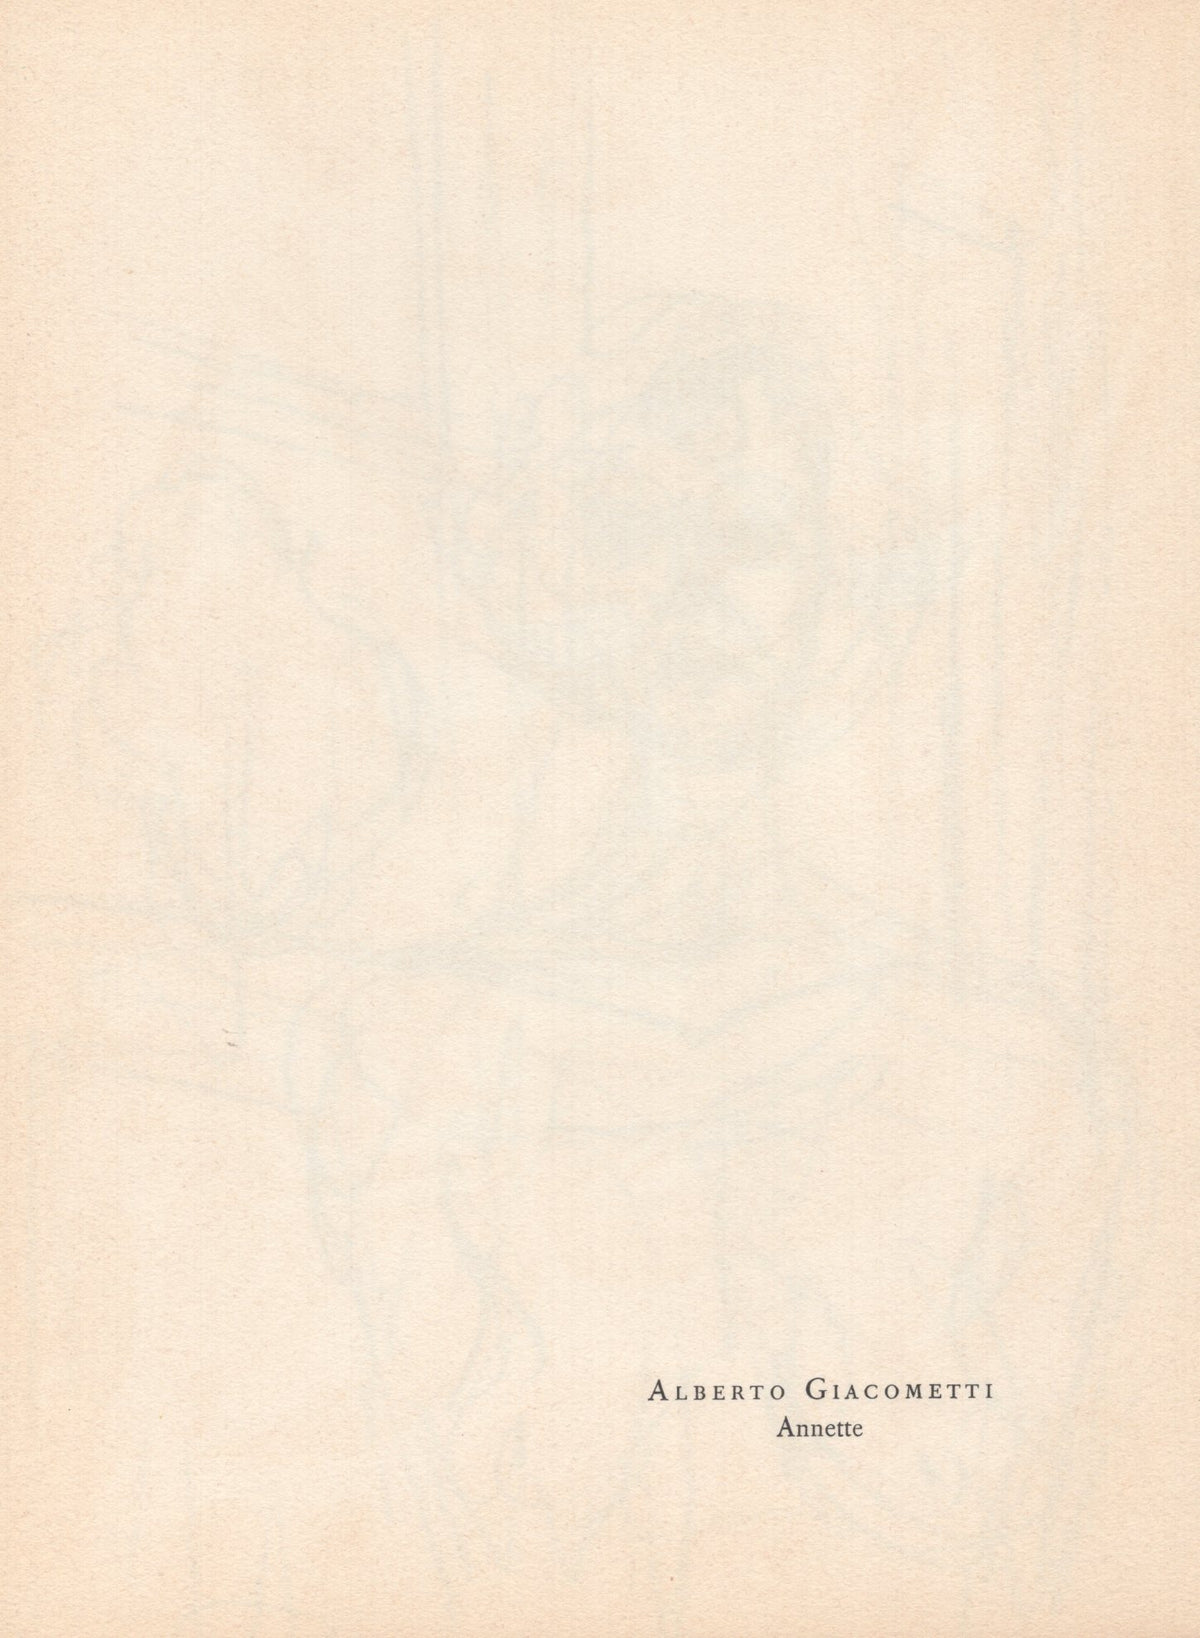 Alberto Giacometti - &quot;Annette&quot; - Mourlot Press 1964 Lithograph - 7.5 x 10&quot;